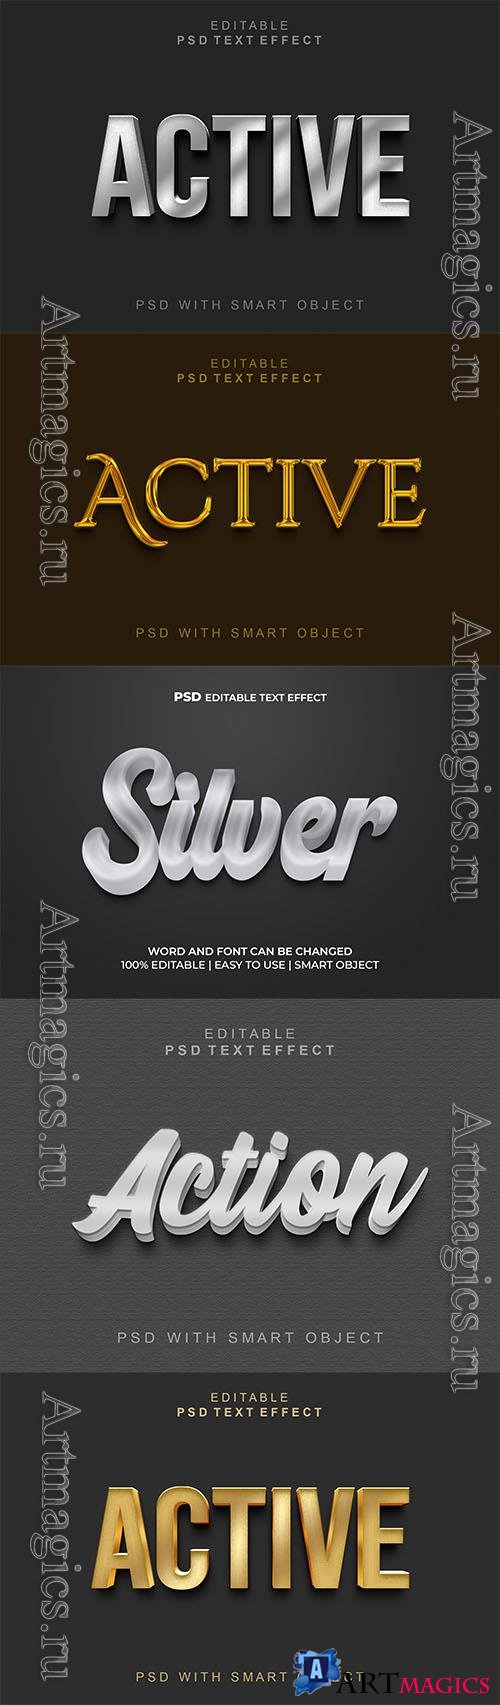 Psd style text effect editable set vol 158